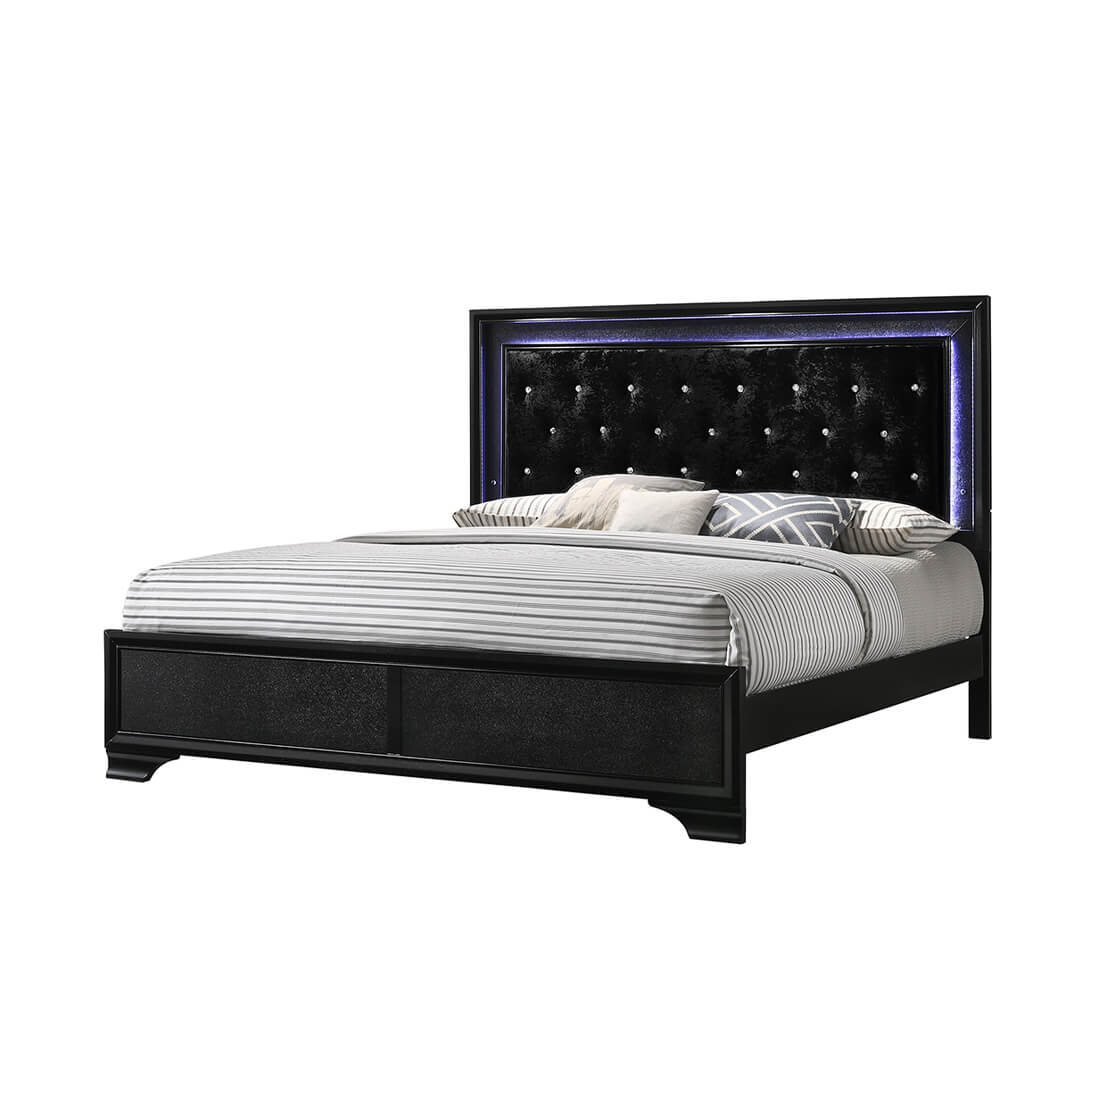 Sasha Collection King Bed Conn S Homeplus, Art Van King Bed